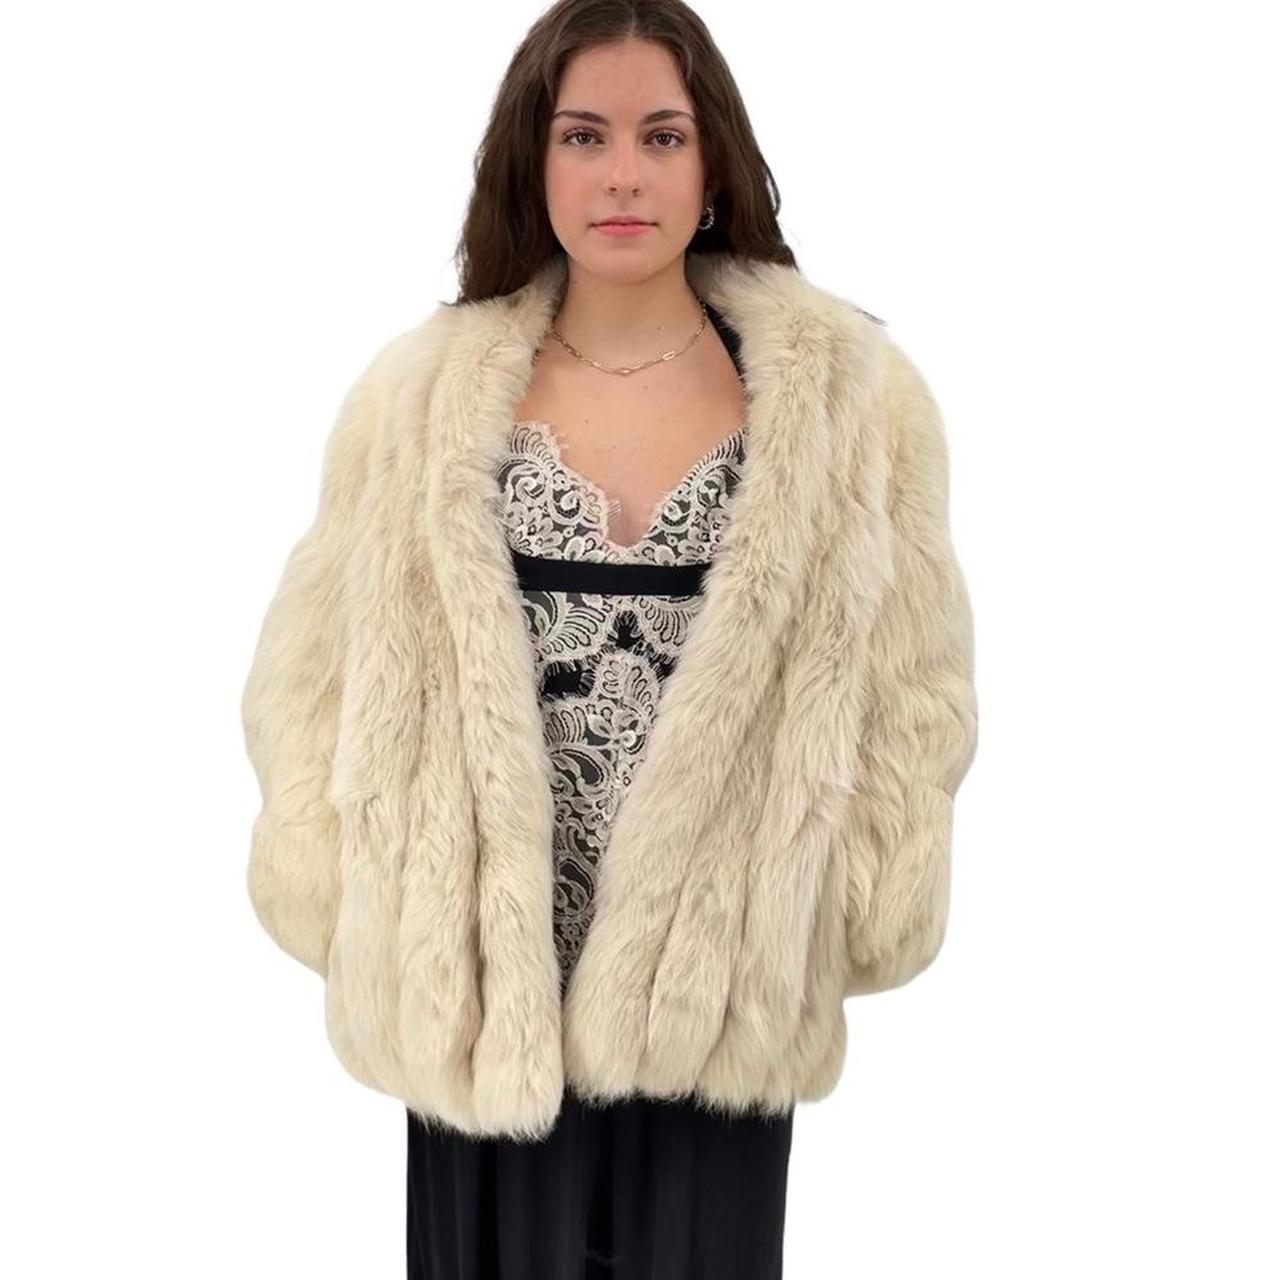 Product Image 1 - Real vintage fur coat. 

‼️